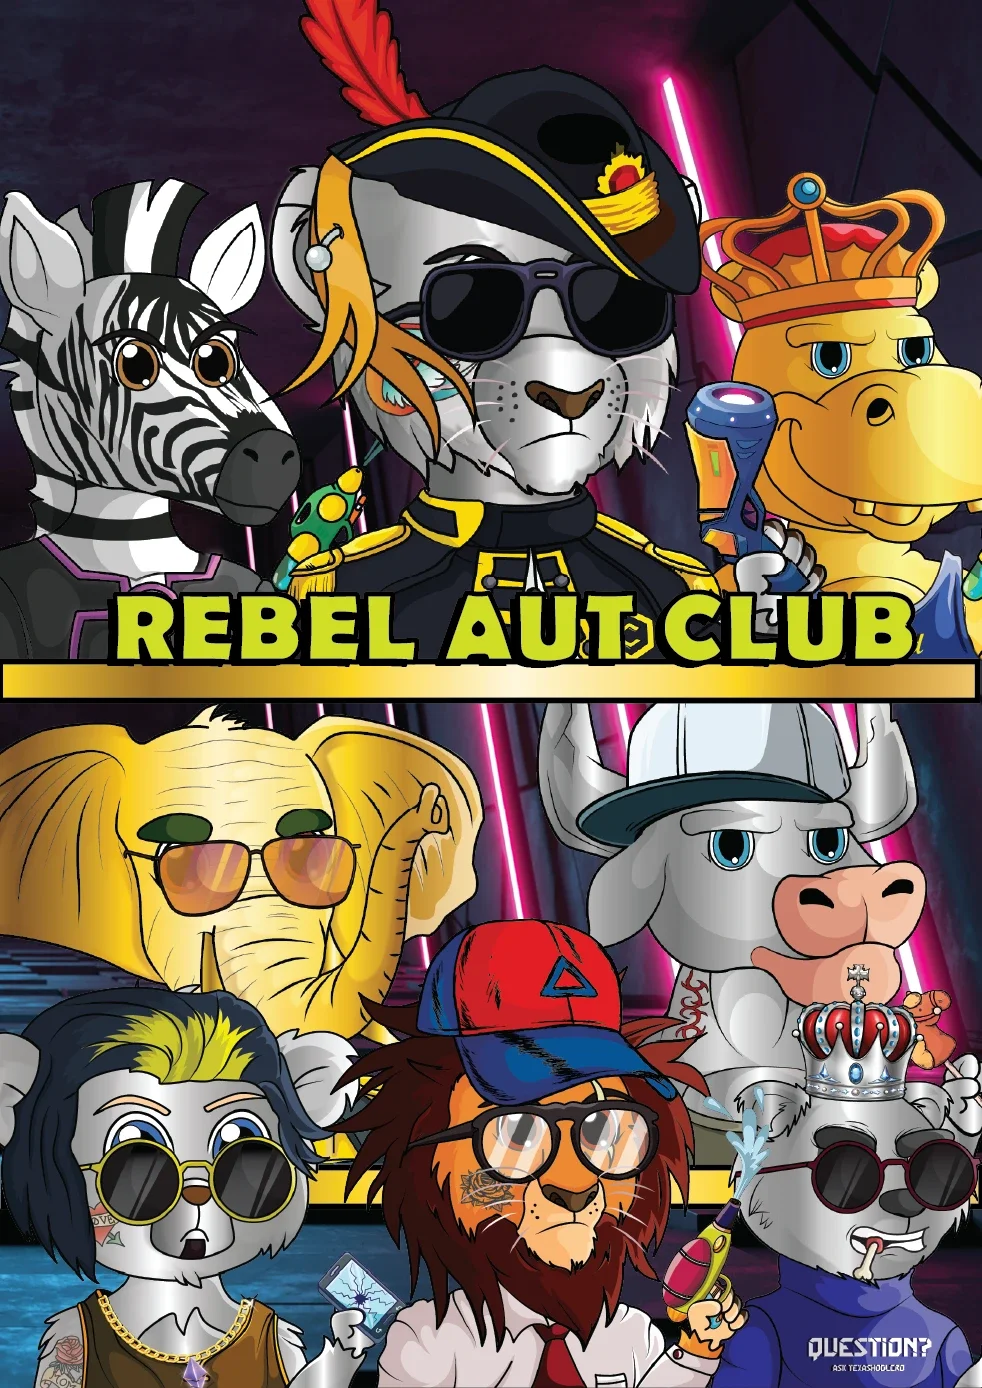 Rebel AUT Club